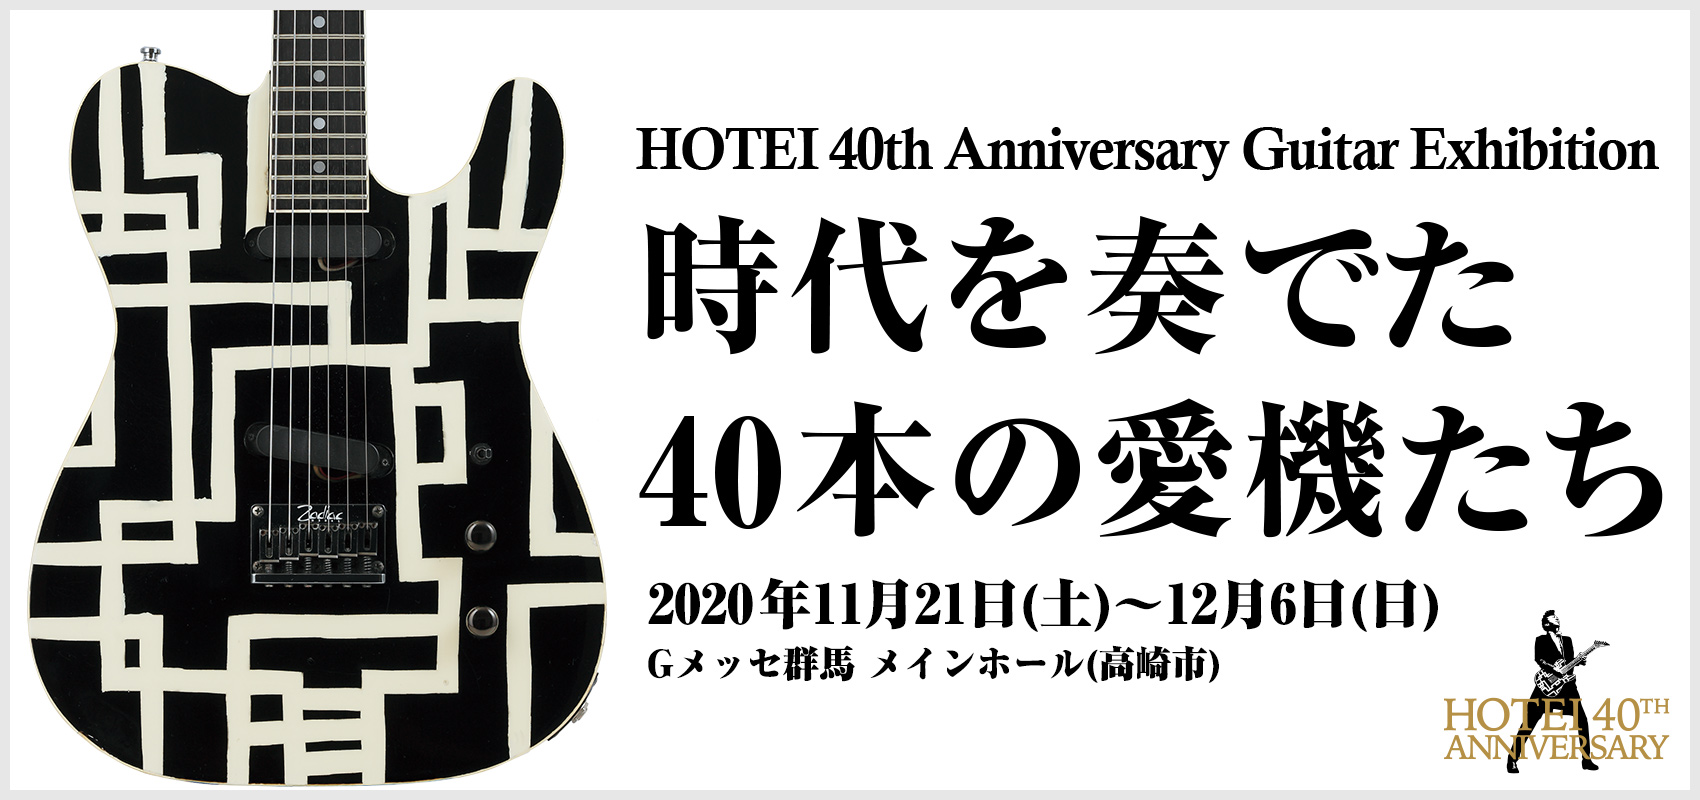 HOTEI 40th Anniversary Guitar Exhibition 時代を奏でた40本の愛機たち